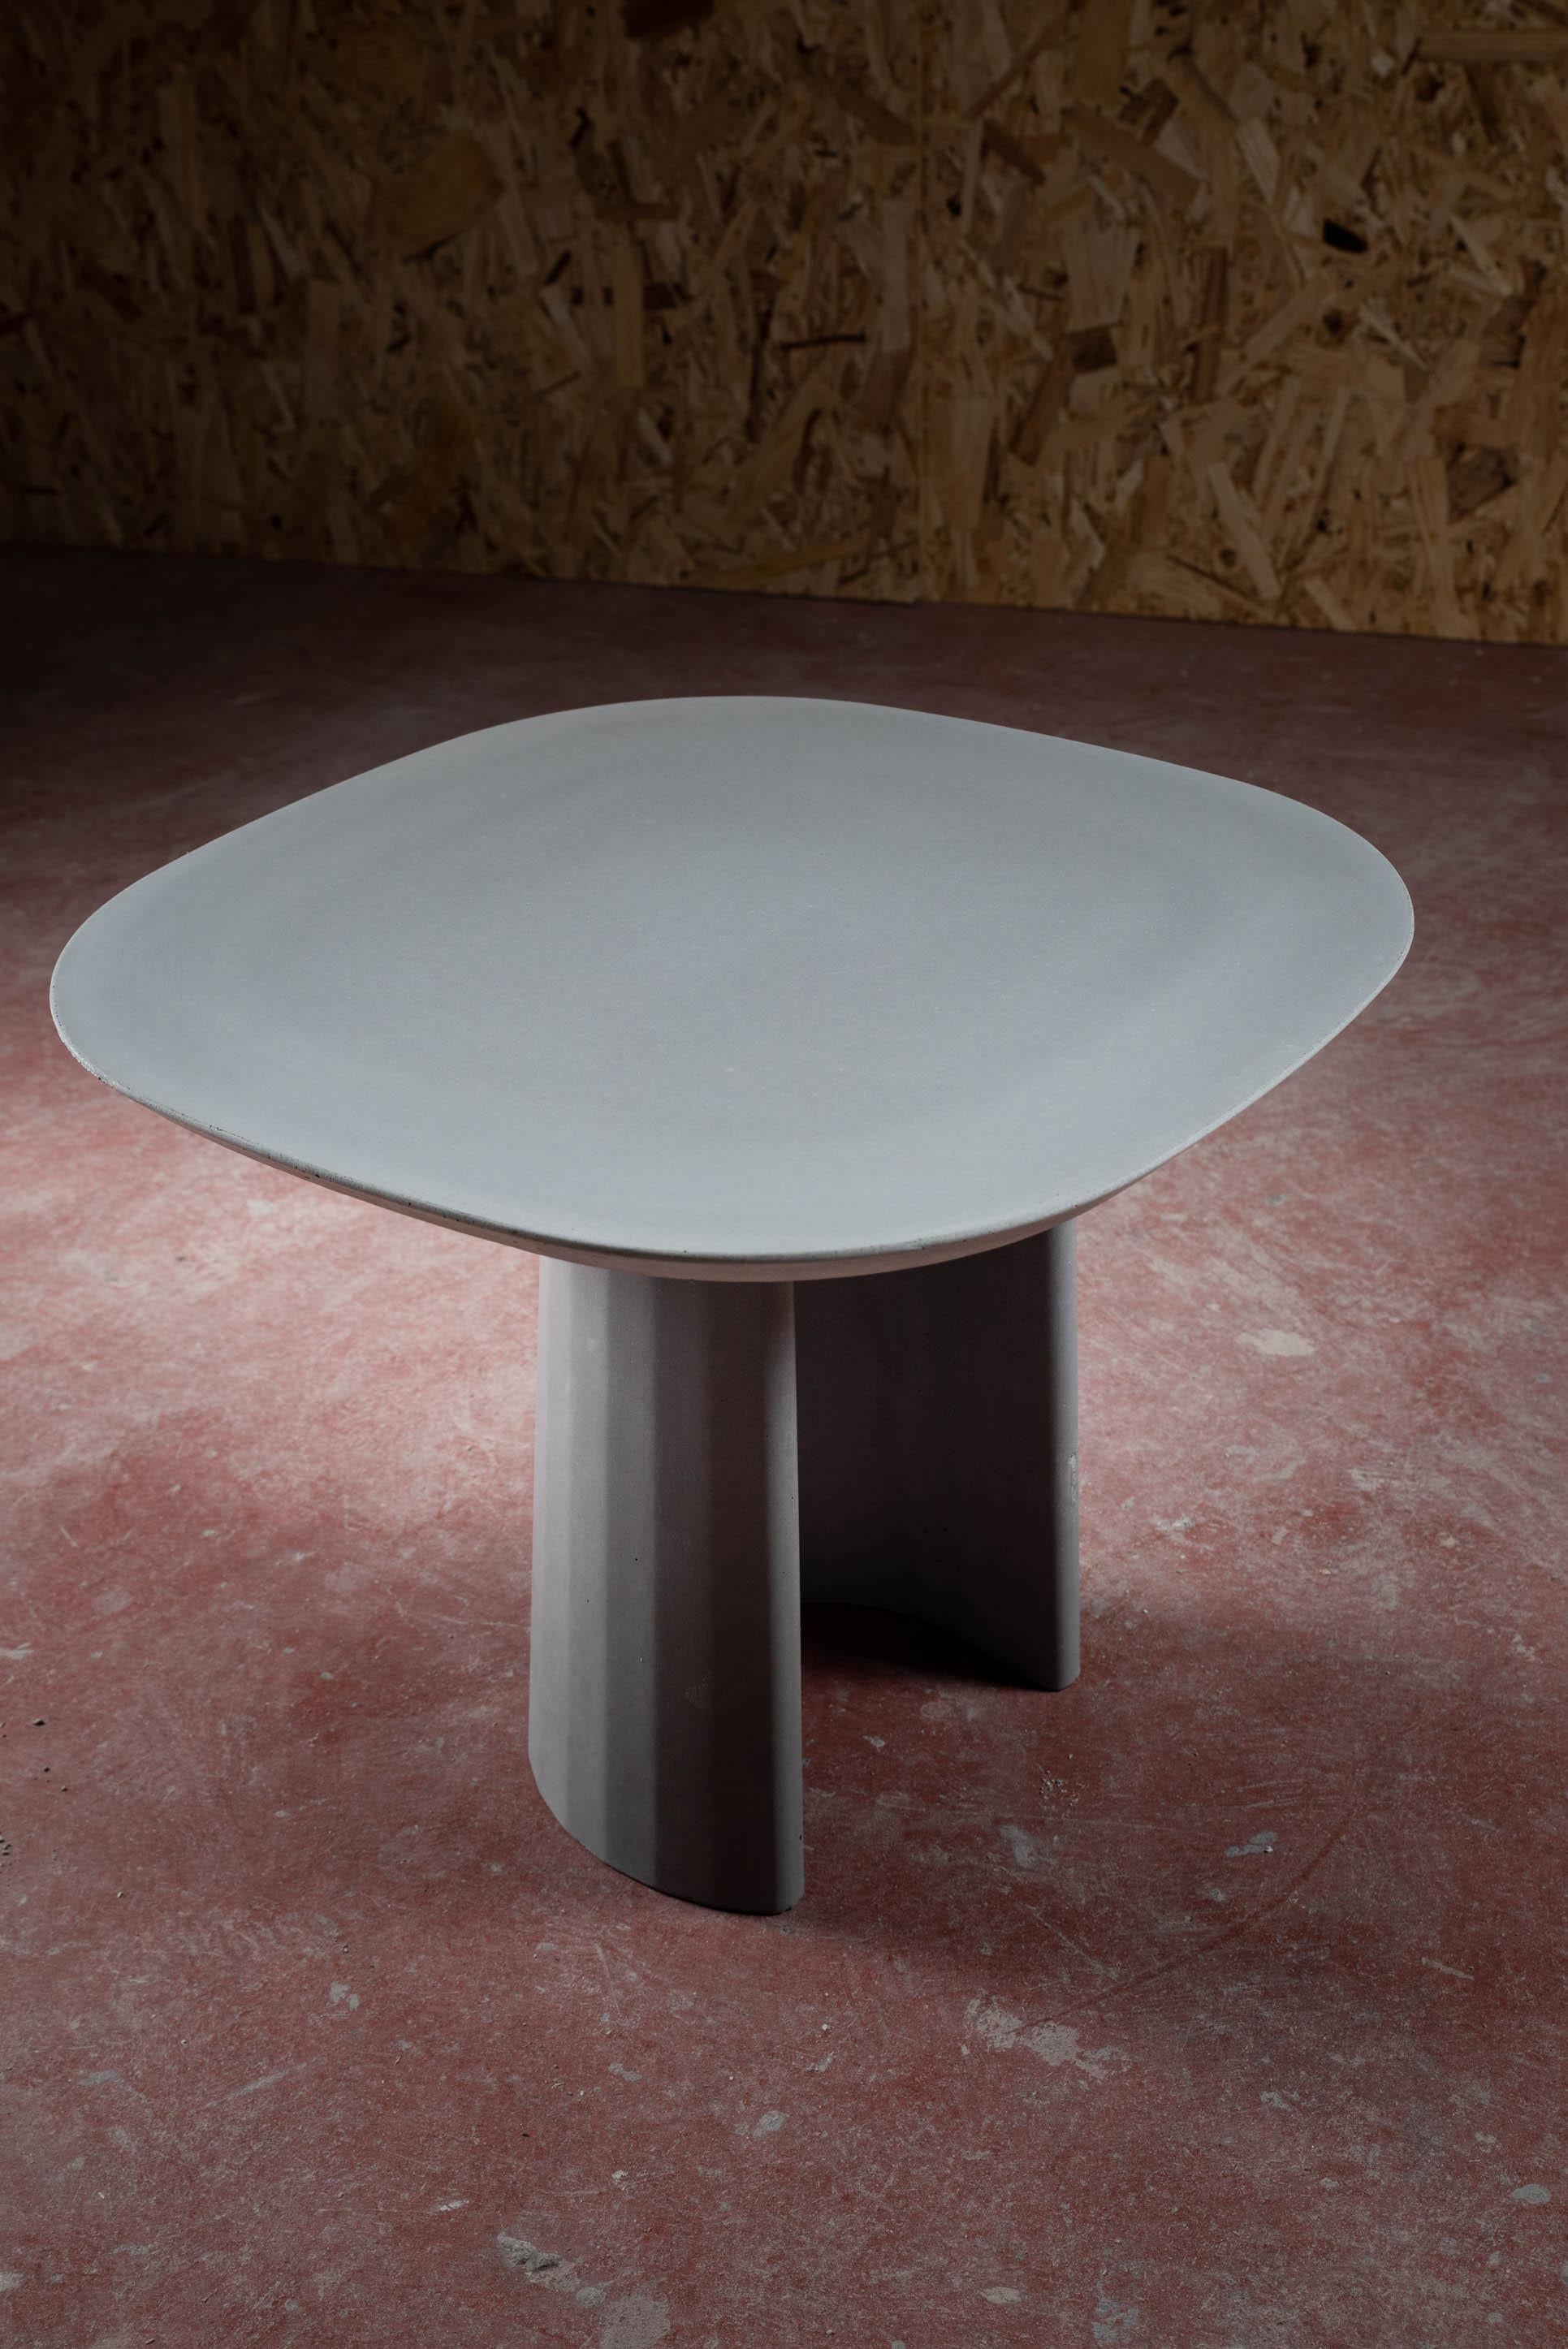 Molded Fusto Domestic Landscape Concrete Coffee Side Table Green Grey Cement Mod.I For Sale